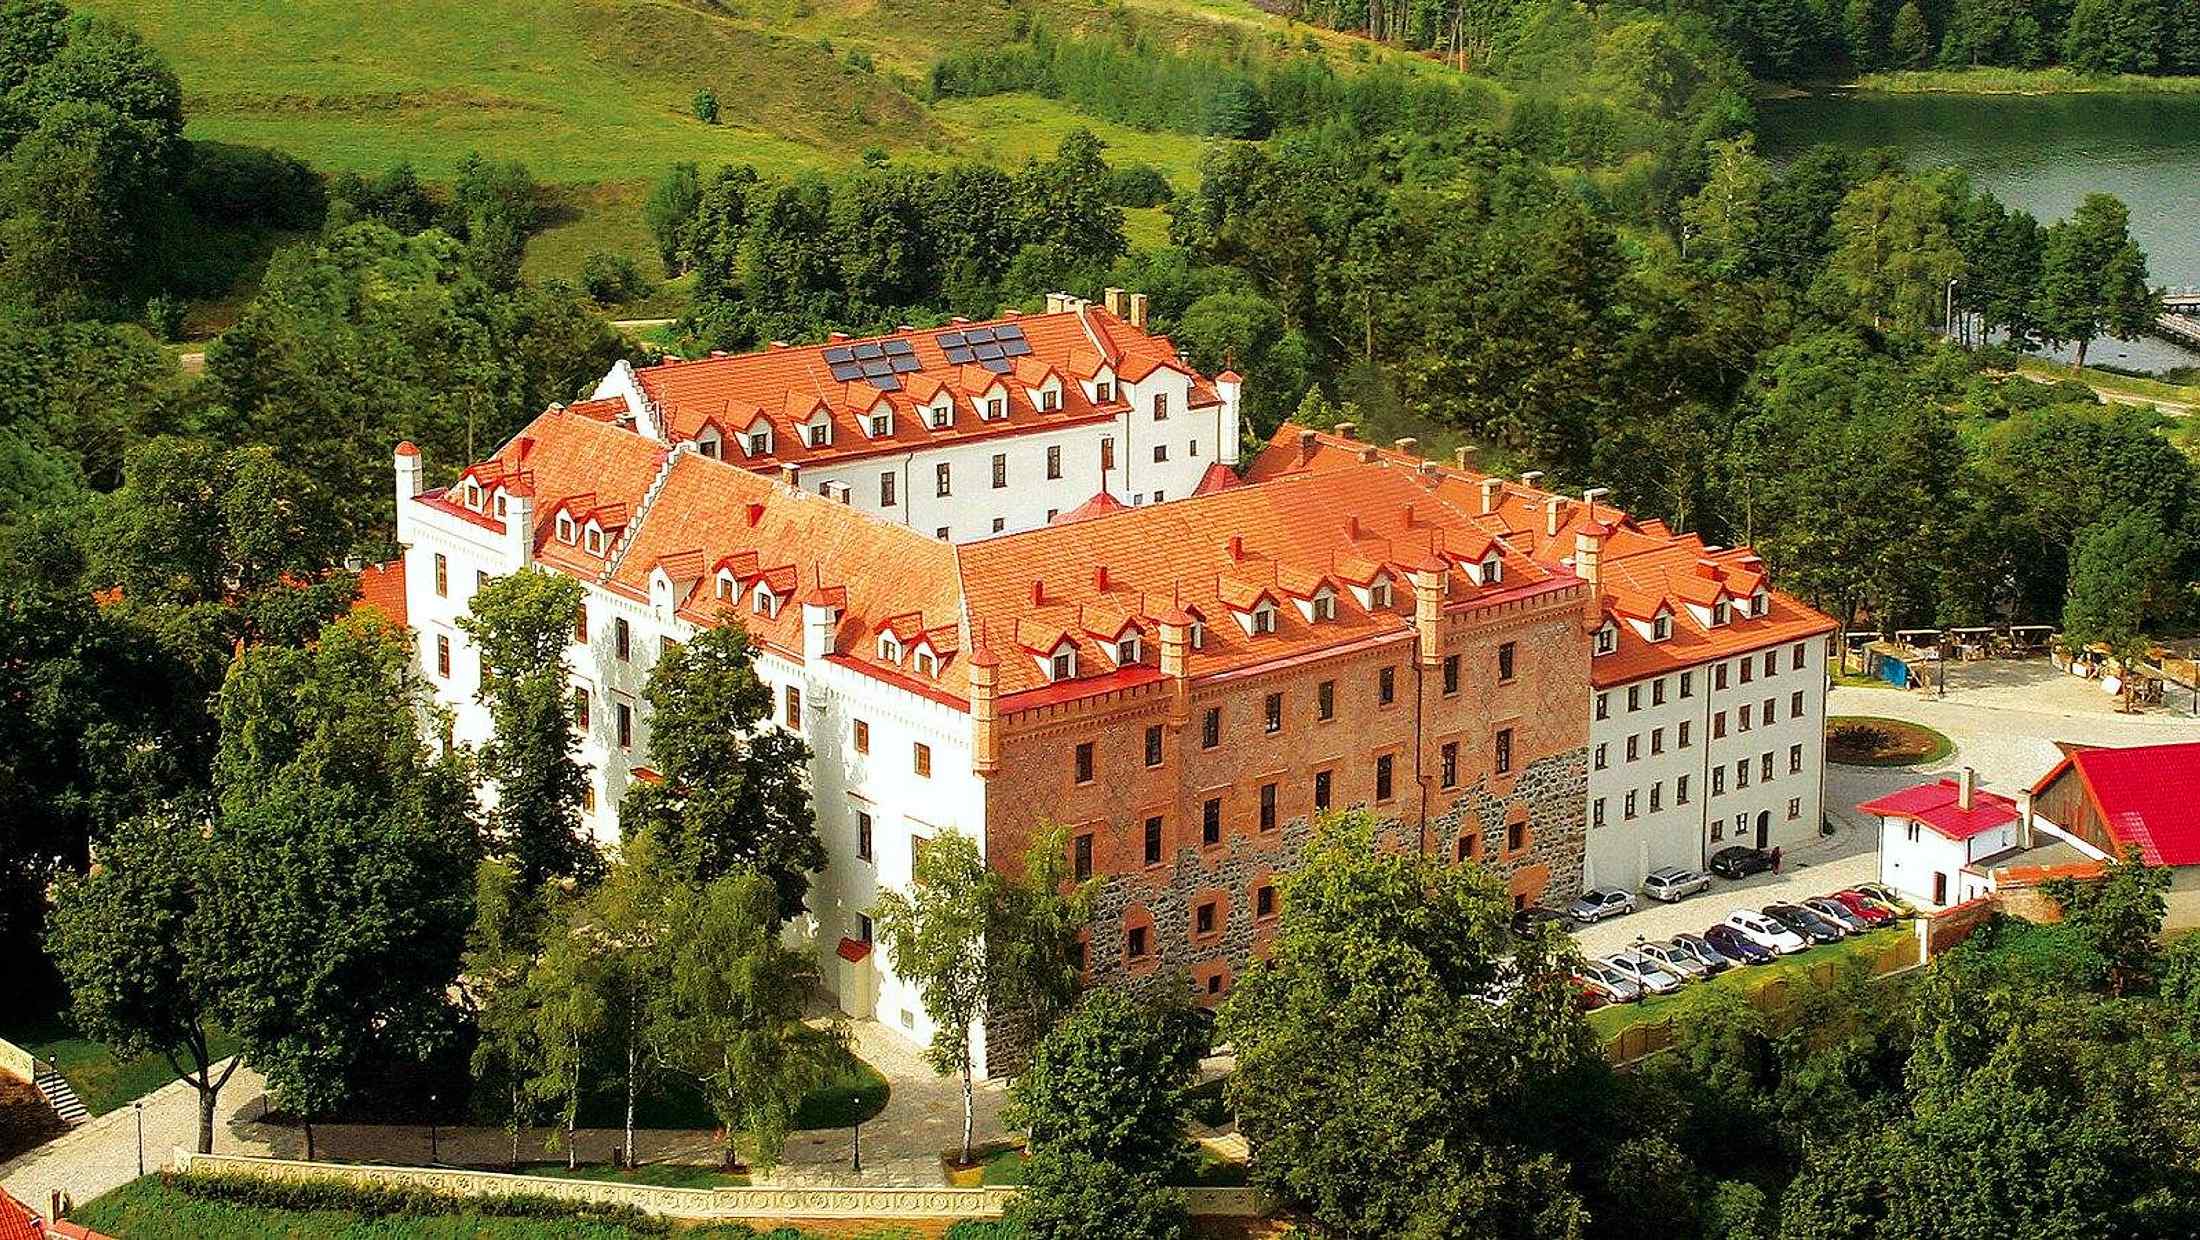 Ryn castle and Mikolajki